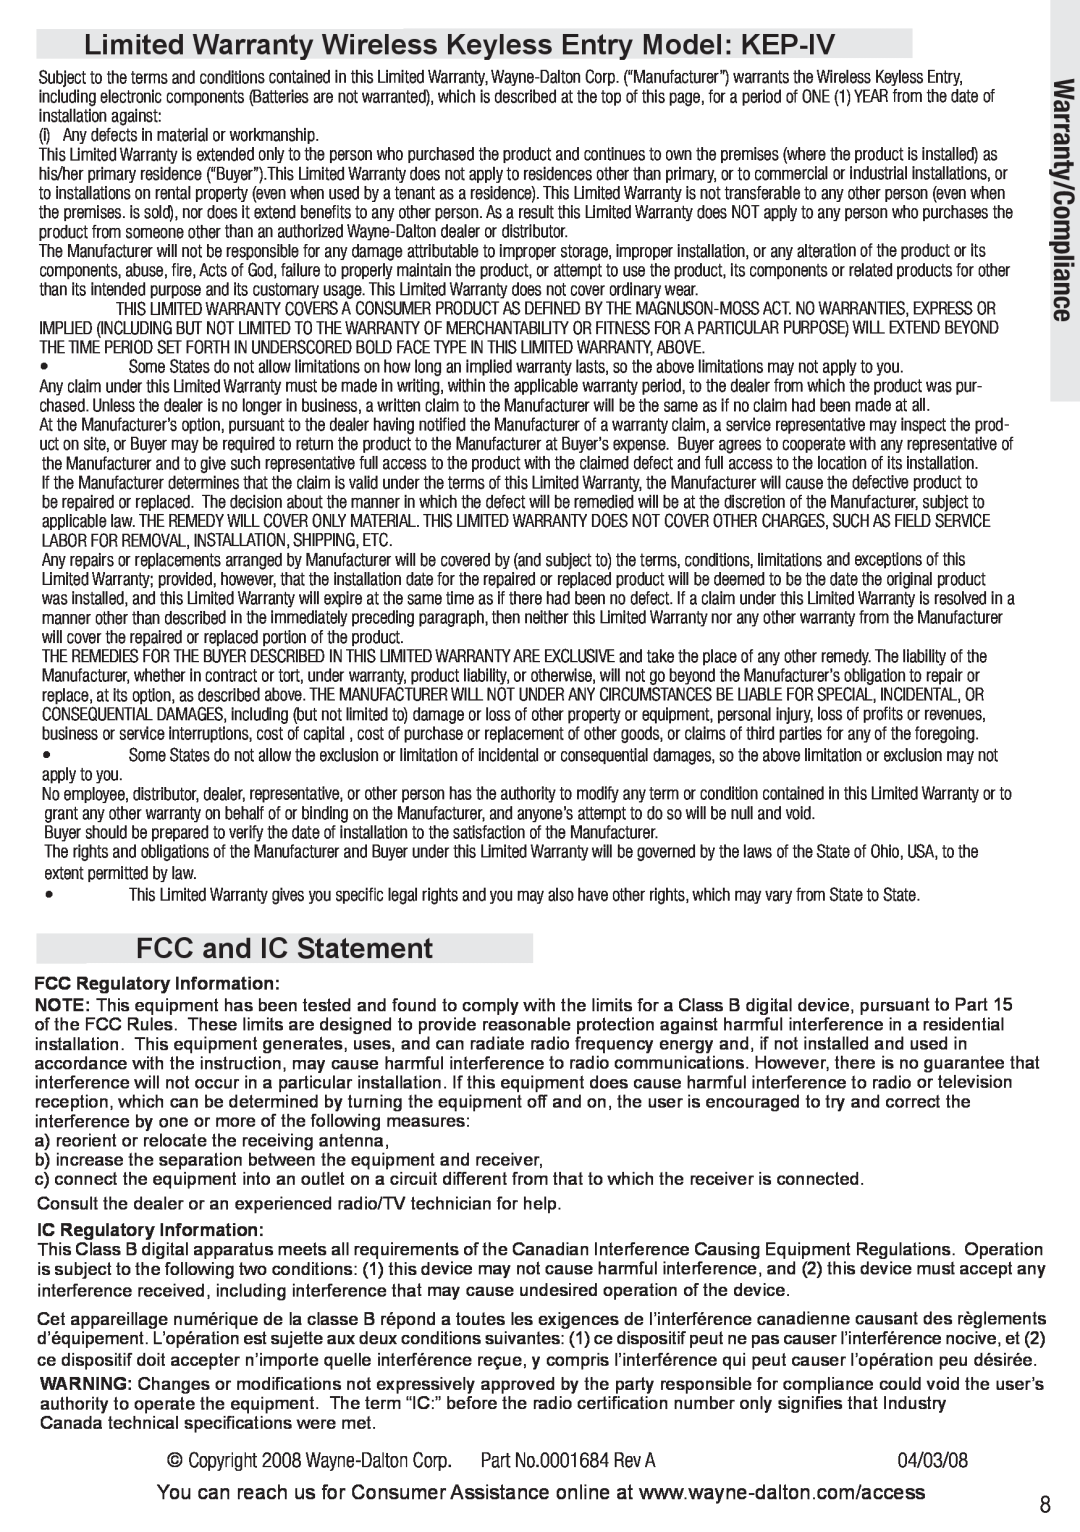 Wayne-Dalton KEP-IV owner manual Warranty/Compliance, FCC and IC Statement, 04/03/08, IC Regulatory Information 